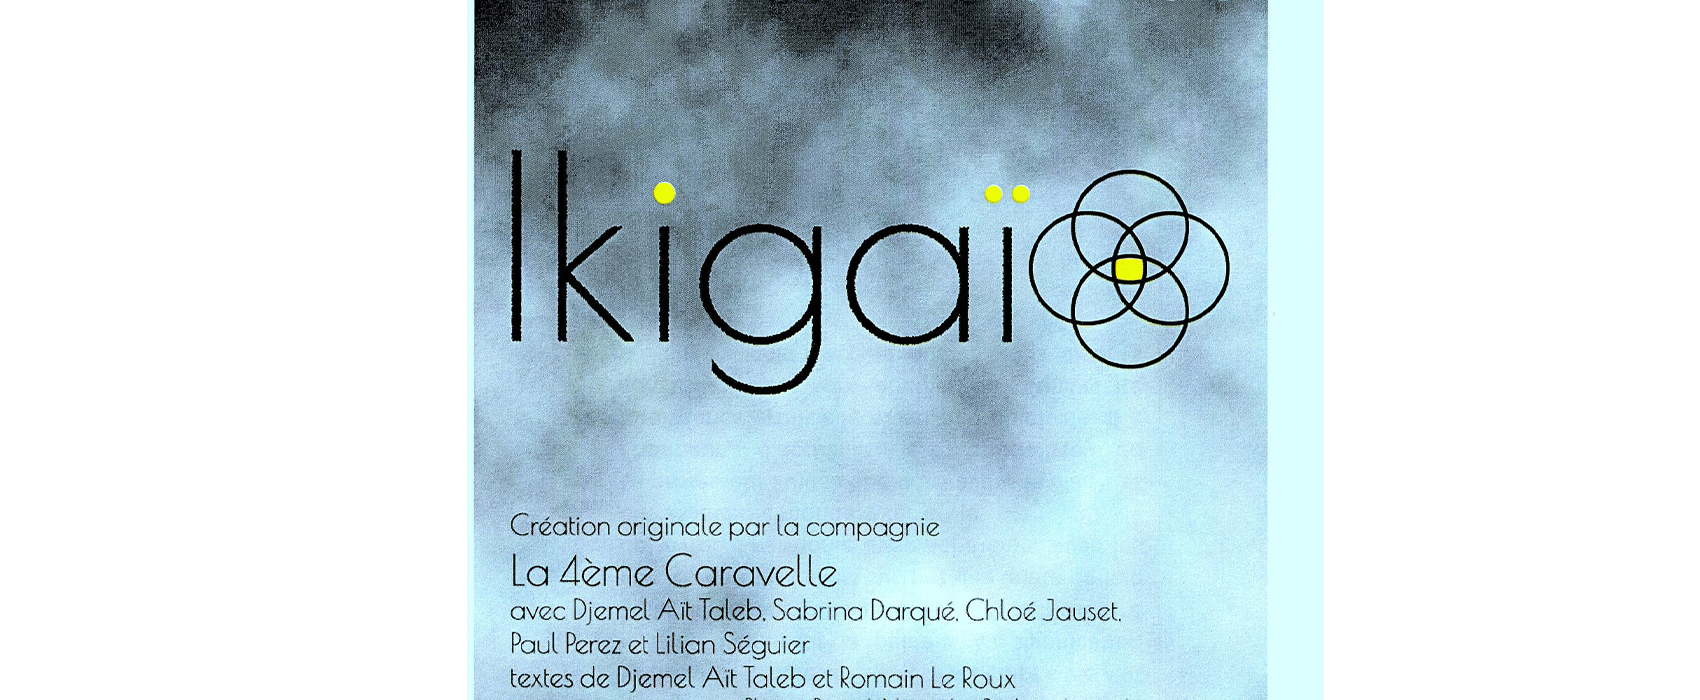 Spectacle : Ikigaï - Compagnie La 4ème caravelle